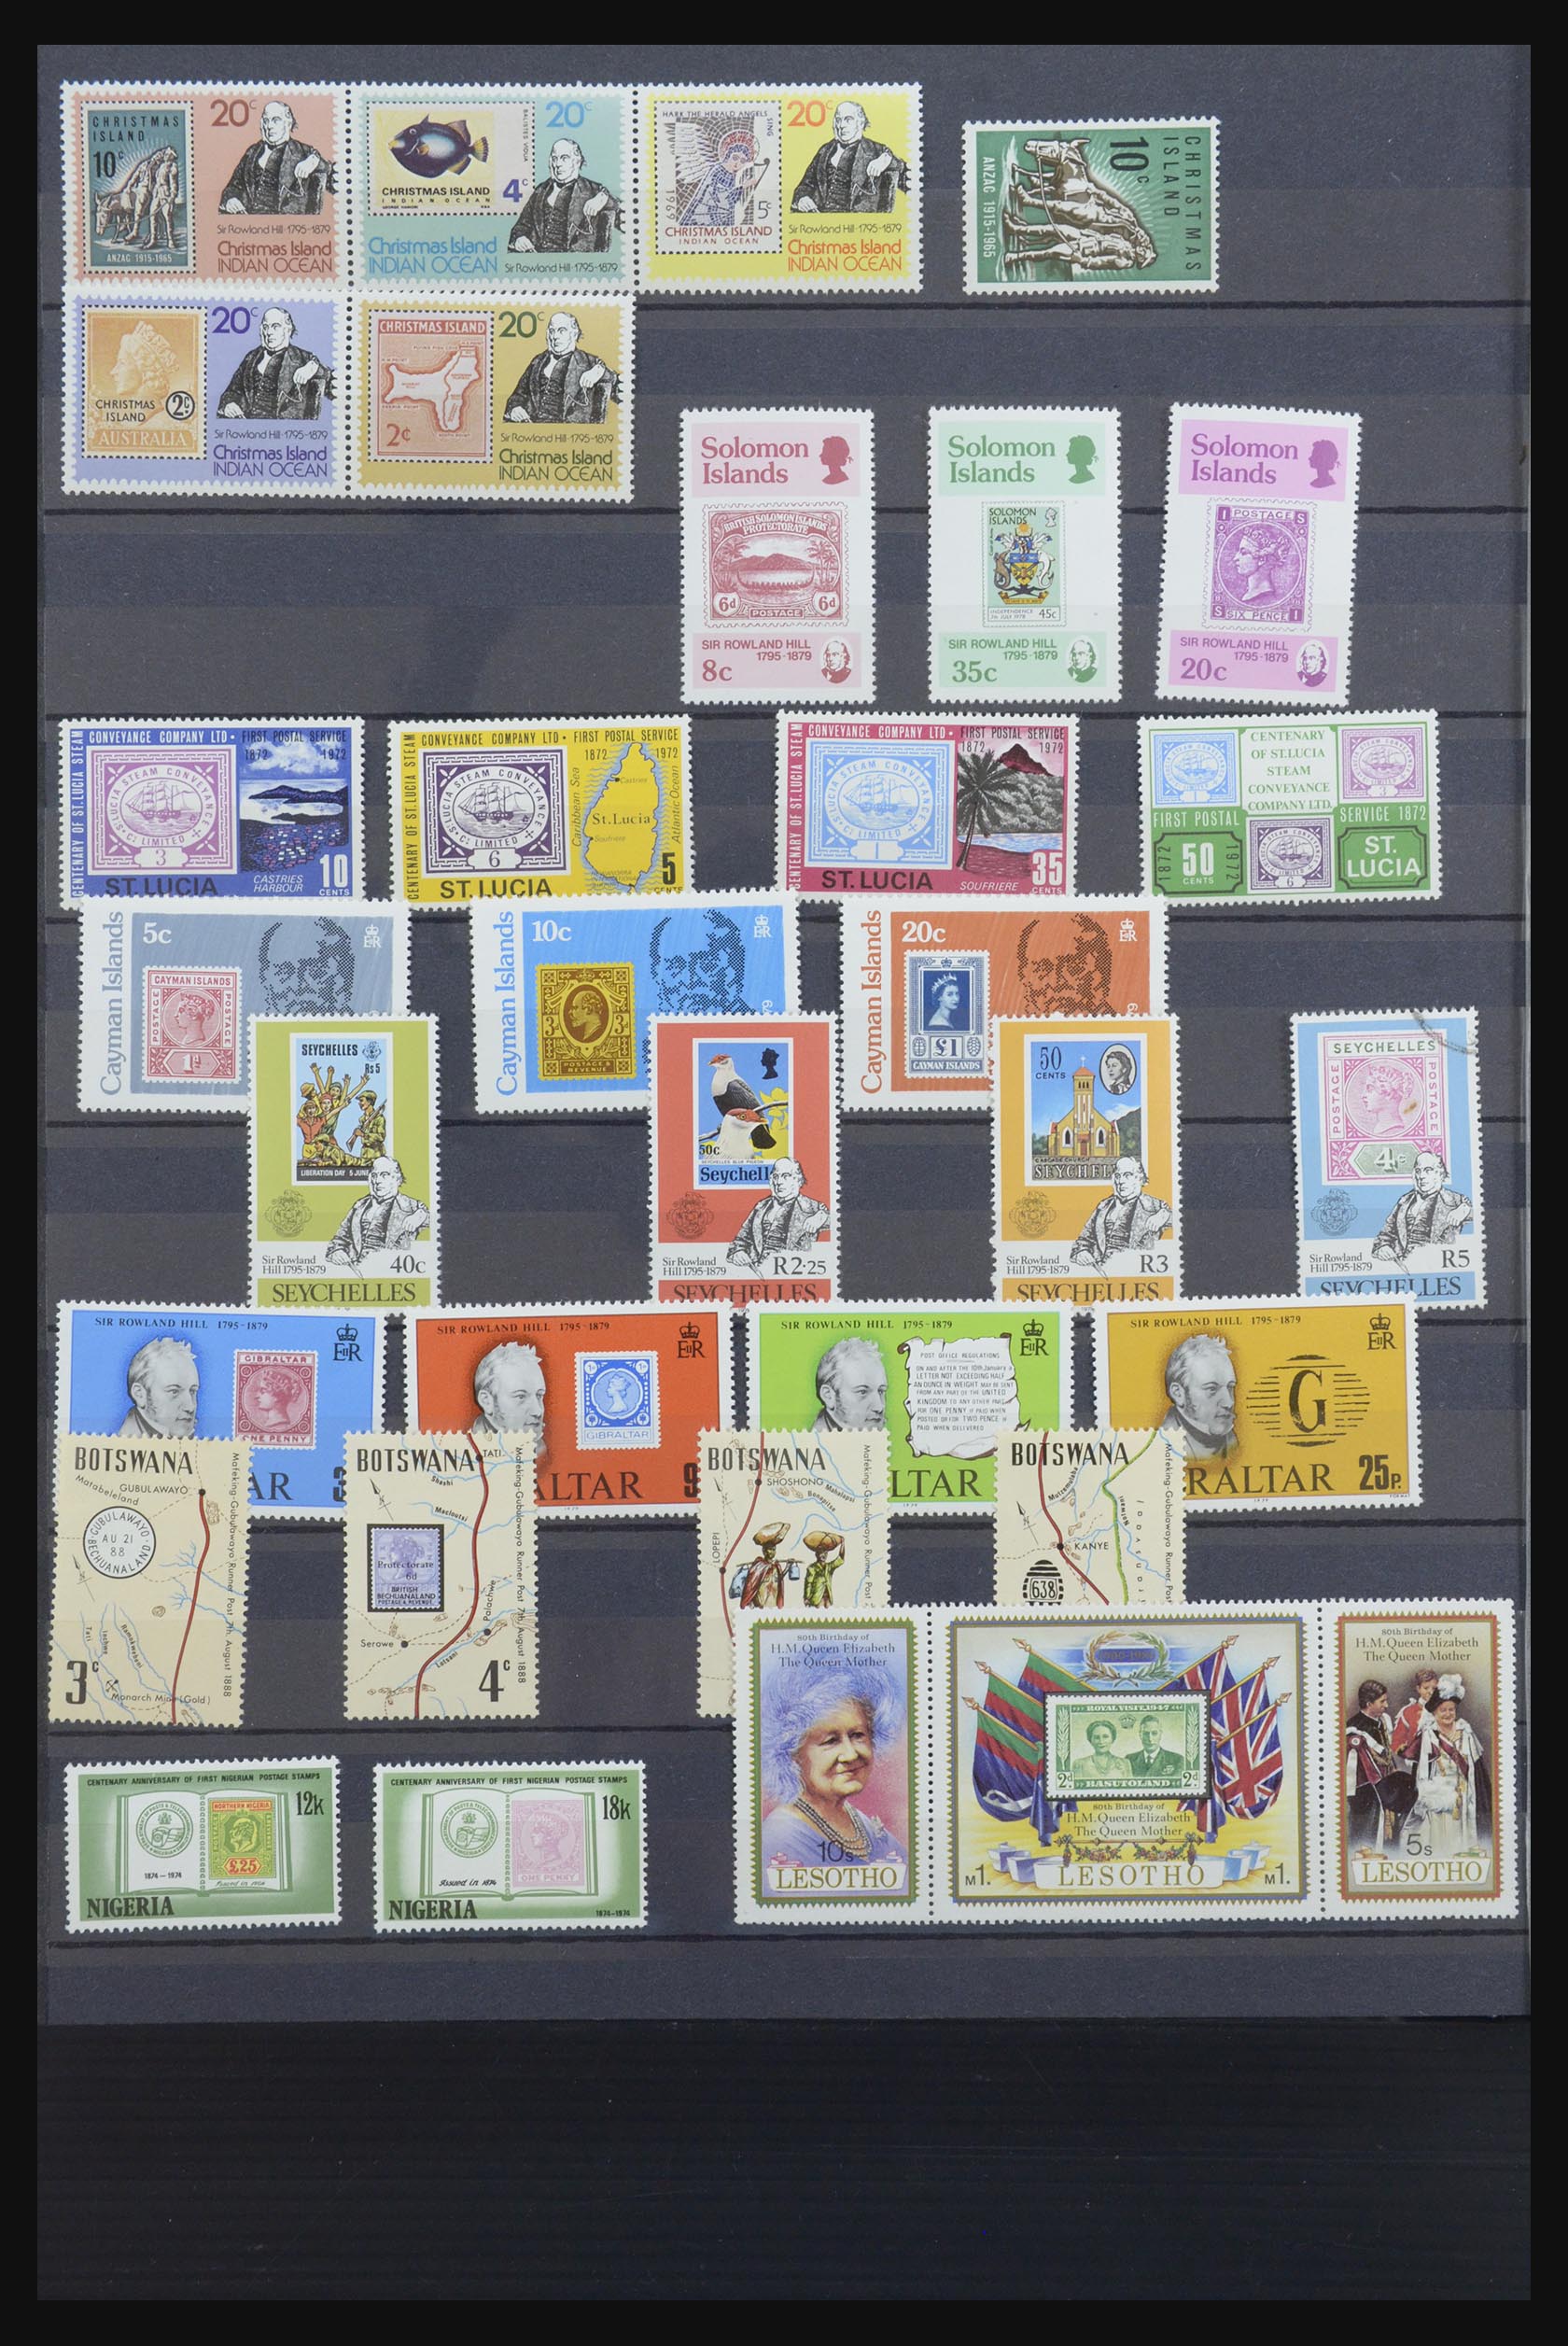 31652 072 - 31652 Motief: postzegel op postzegel 1940-1993.